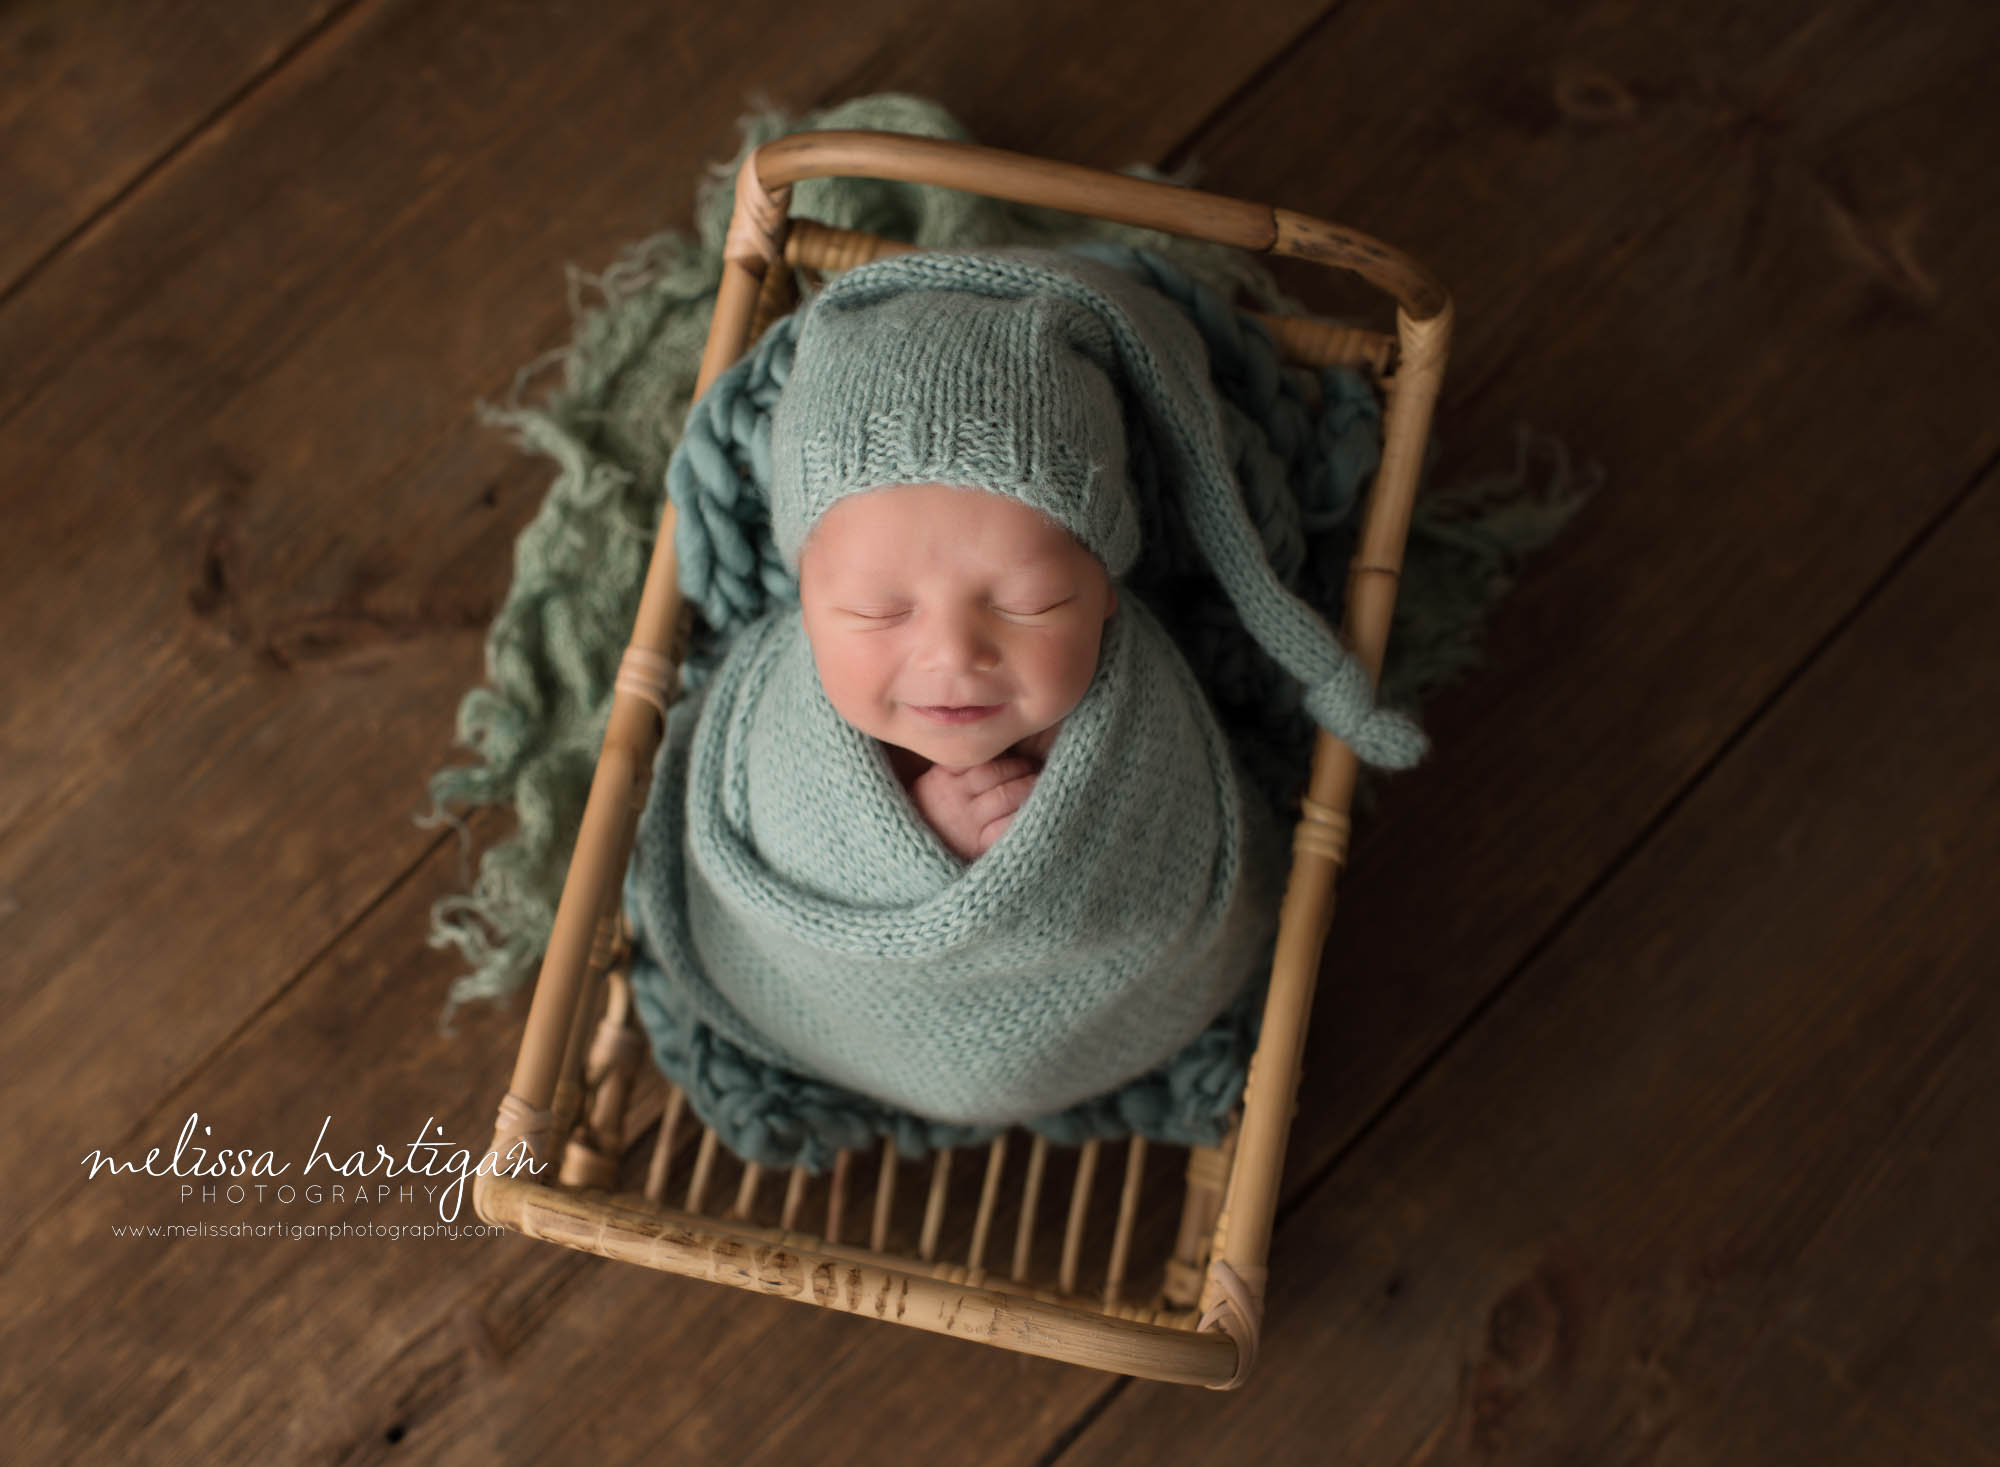 newborn abby boy posed in basket wearing knitted sleepy cap smiling happy baby